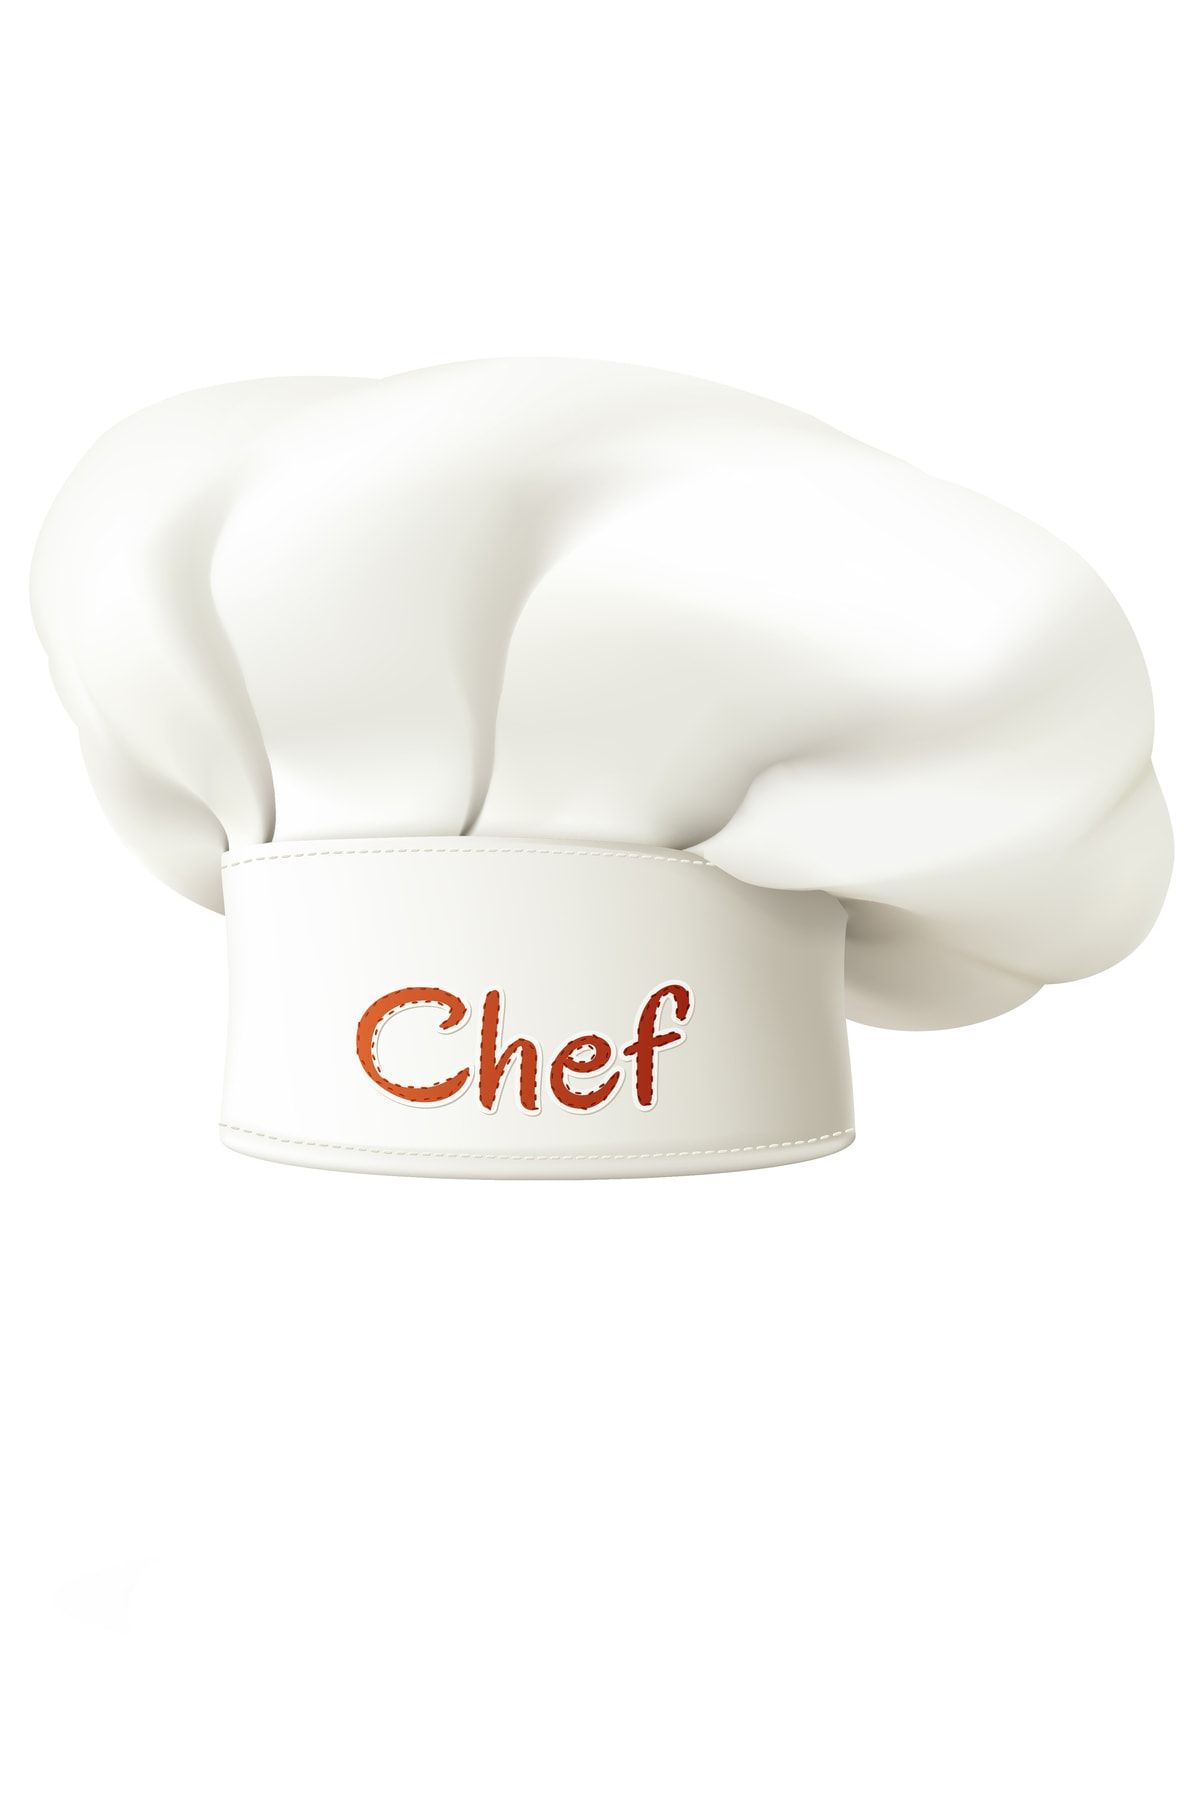 AYSHOME Ays Home Red Chef Aşçı Şapkası